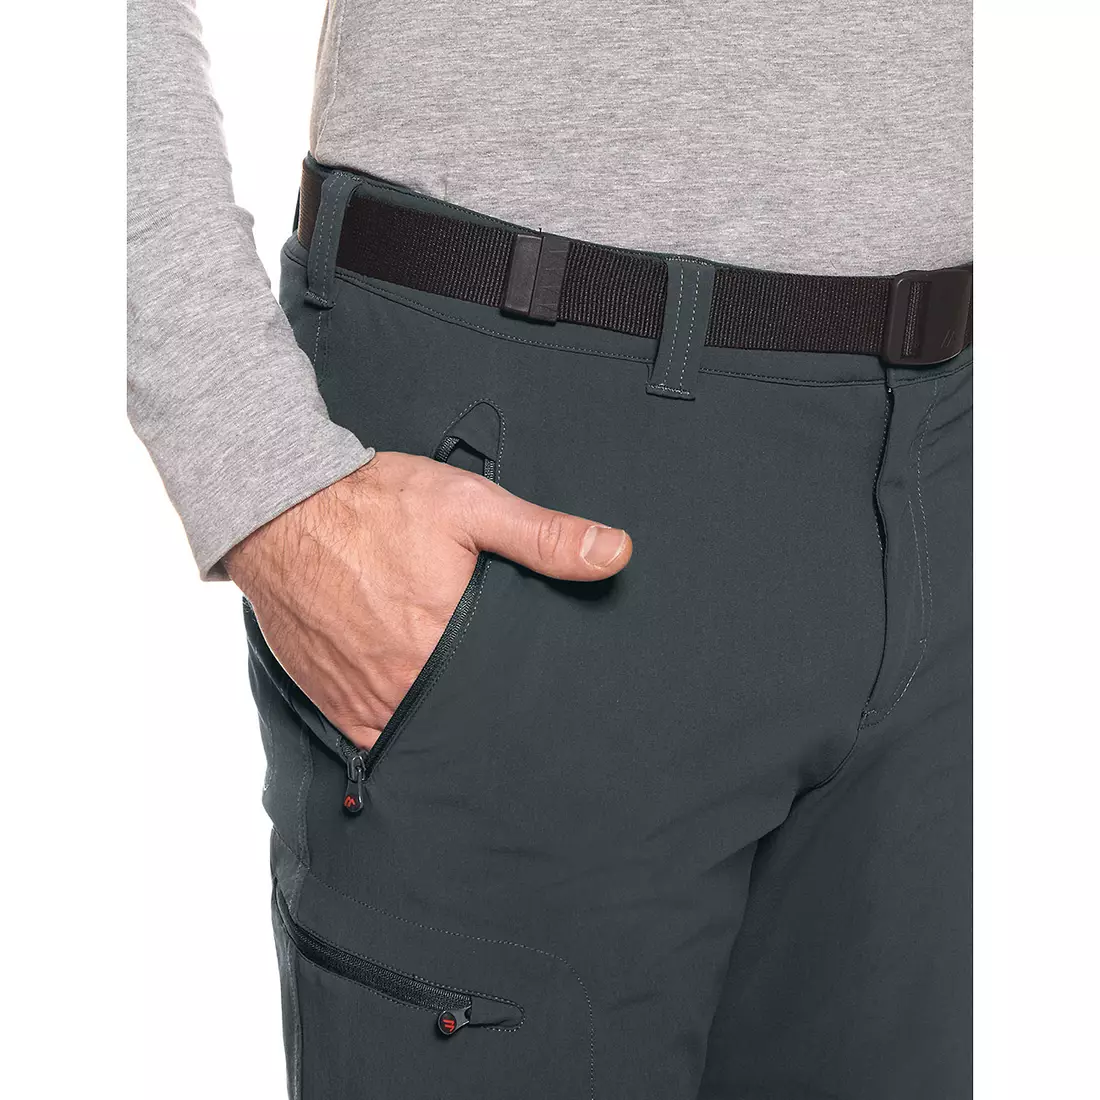 MAIER Pantaloni de drumeție pentru bărbați OBERJOCH THERM graphite 137009/949